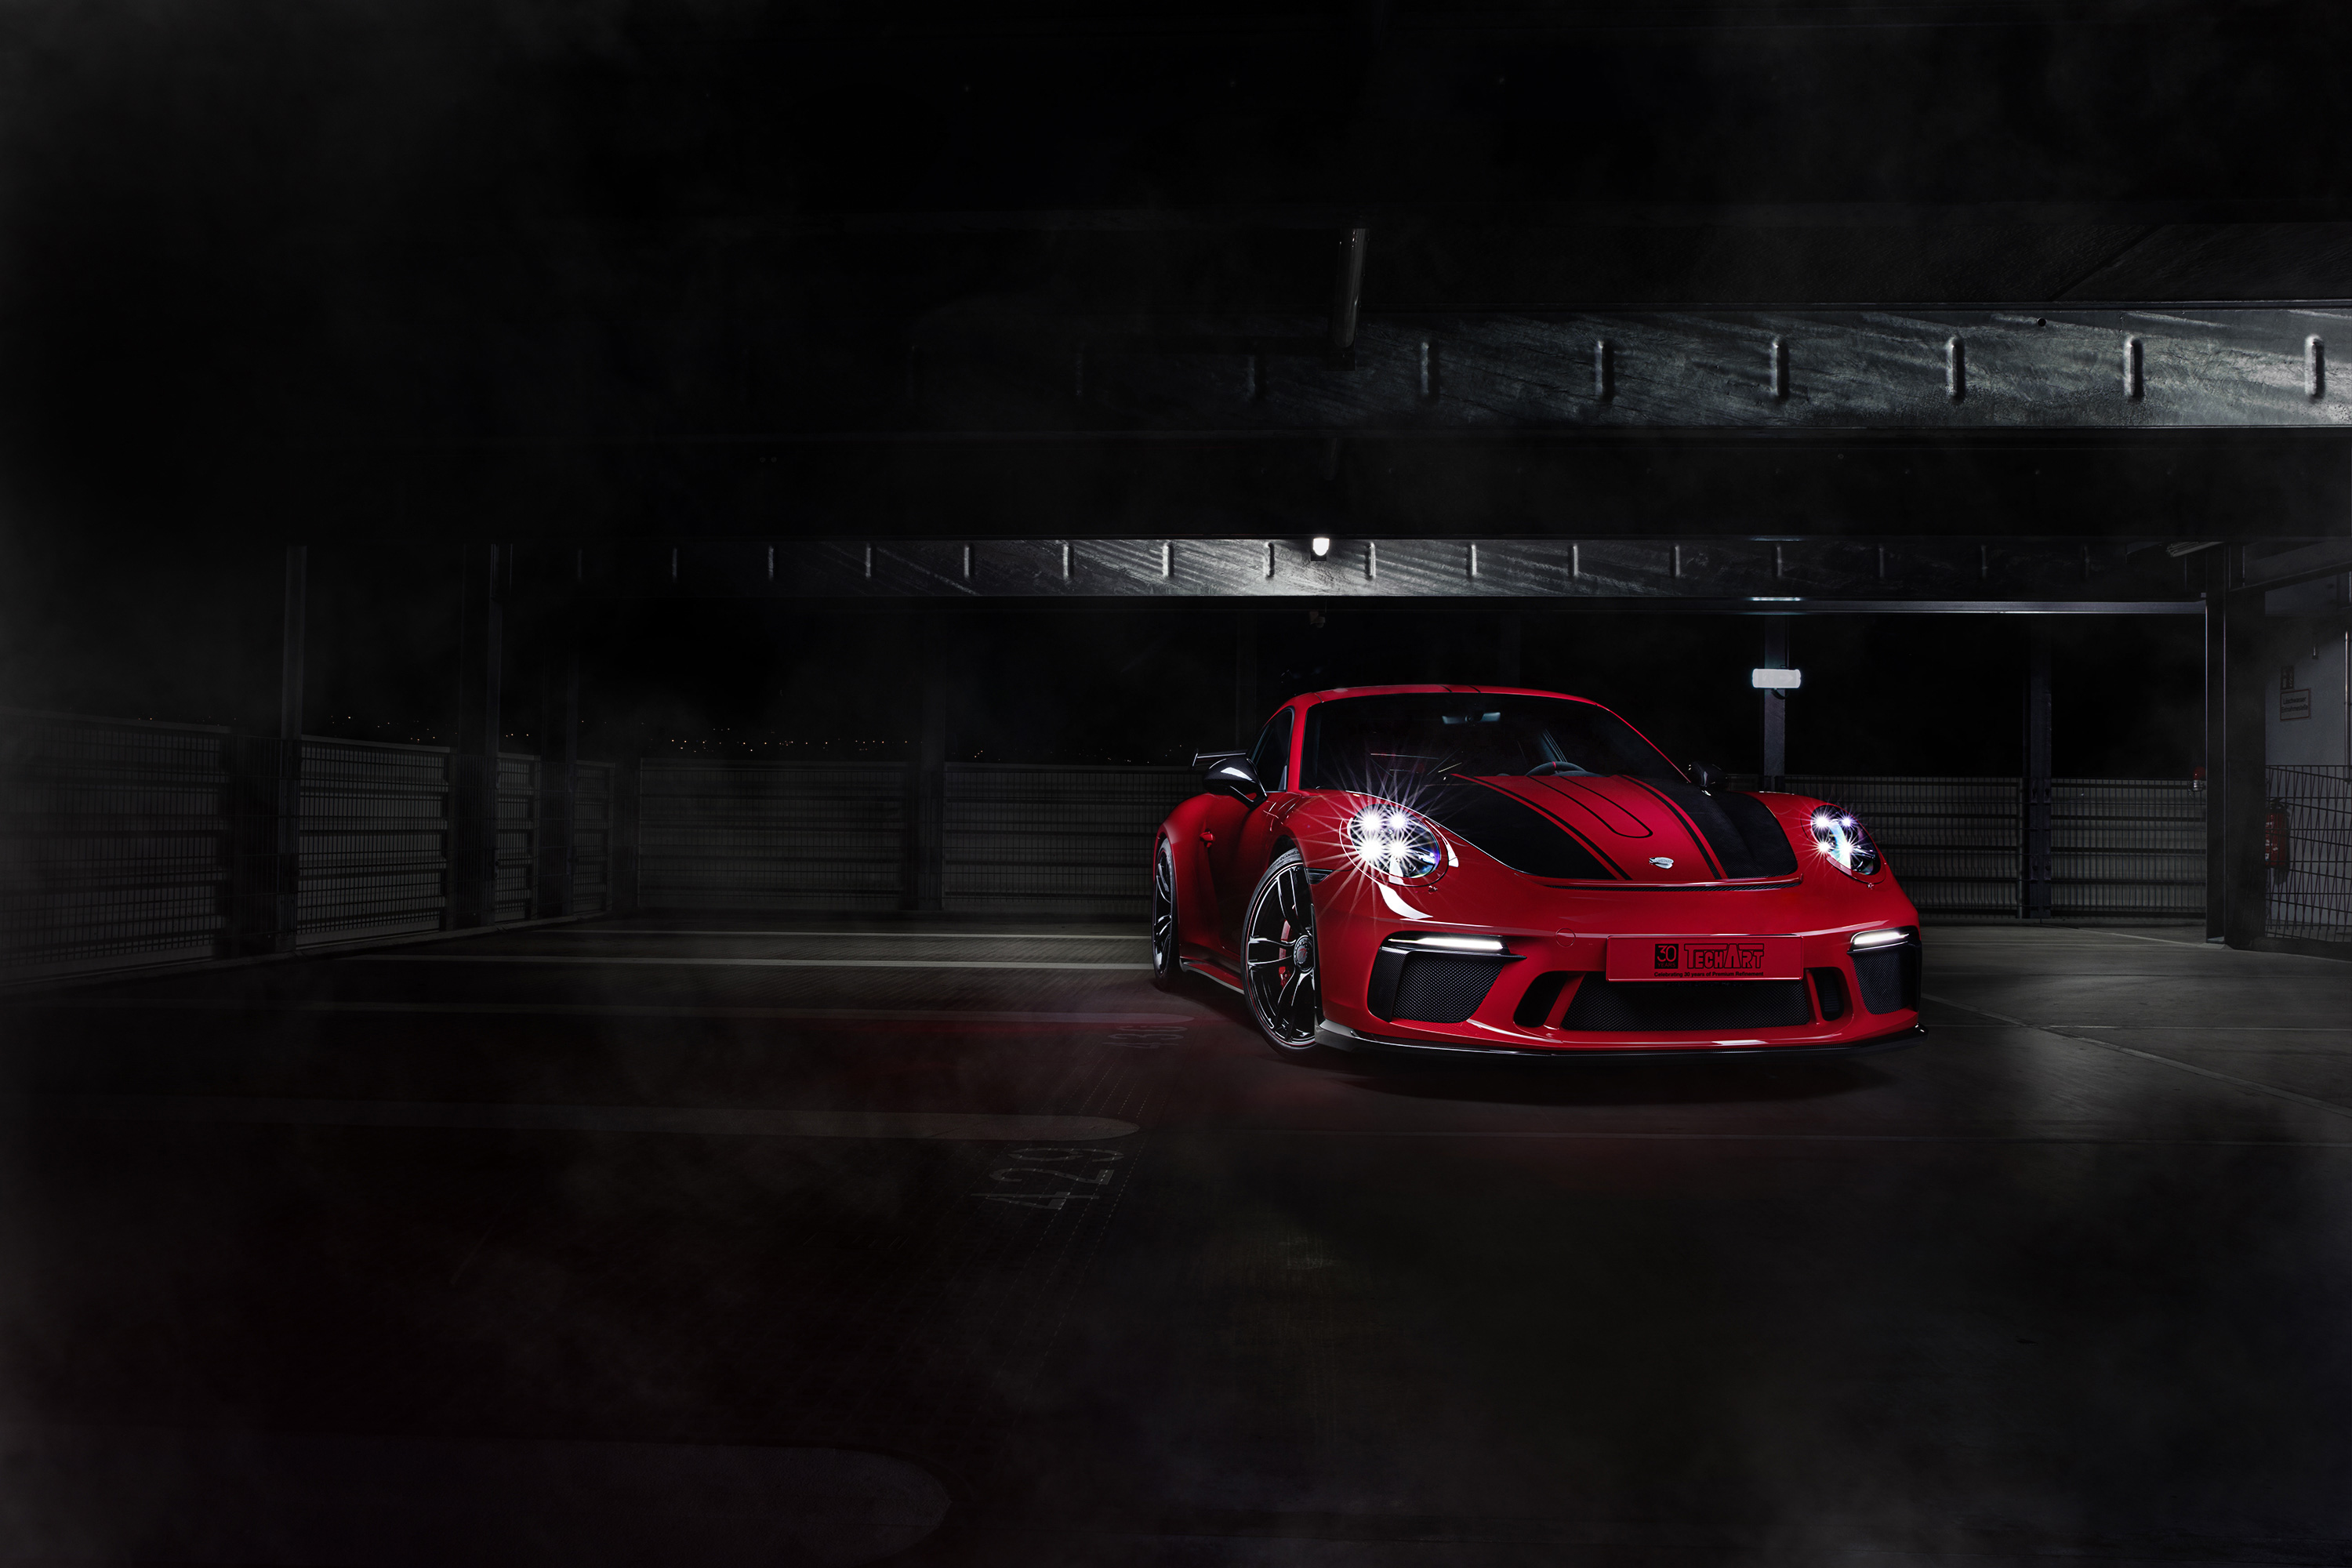 Free photo A red and black-striped 2018 Porsche 911 stands in a dark garage